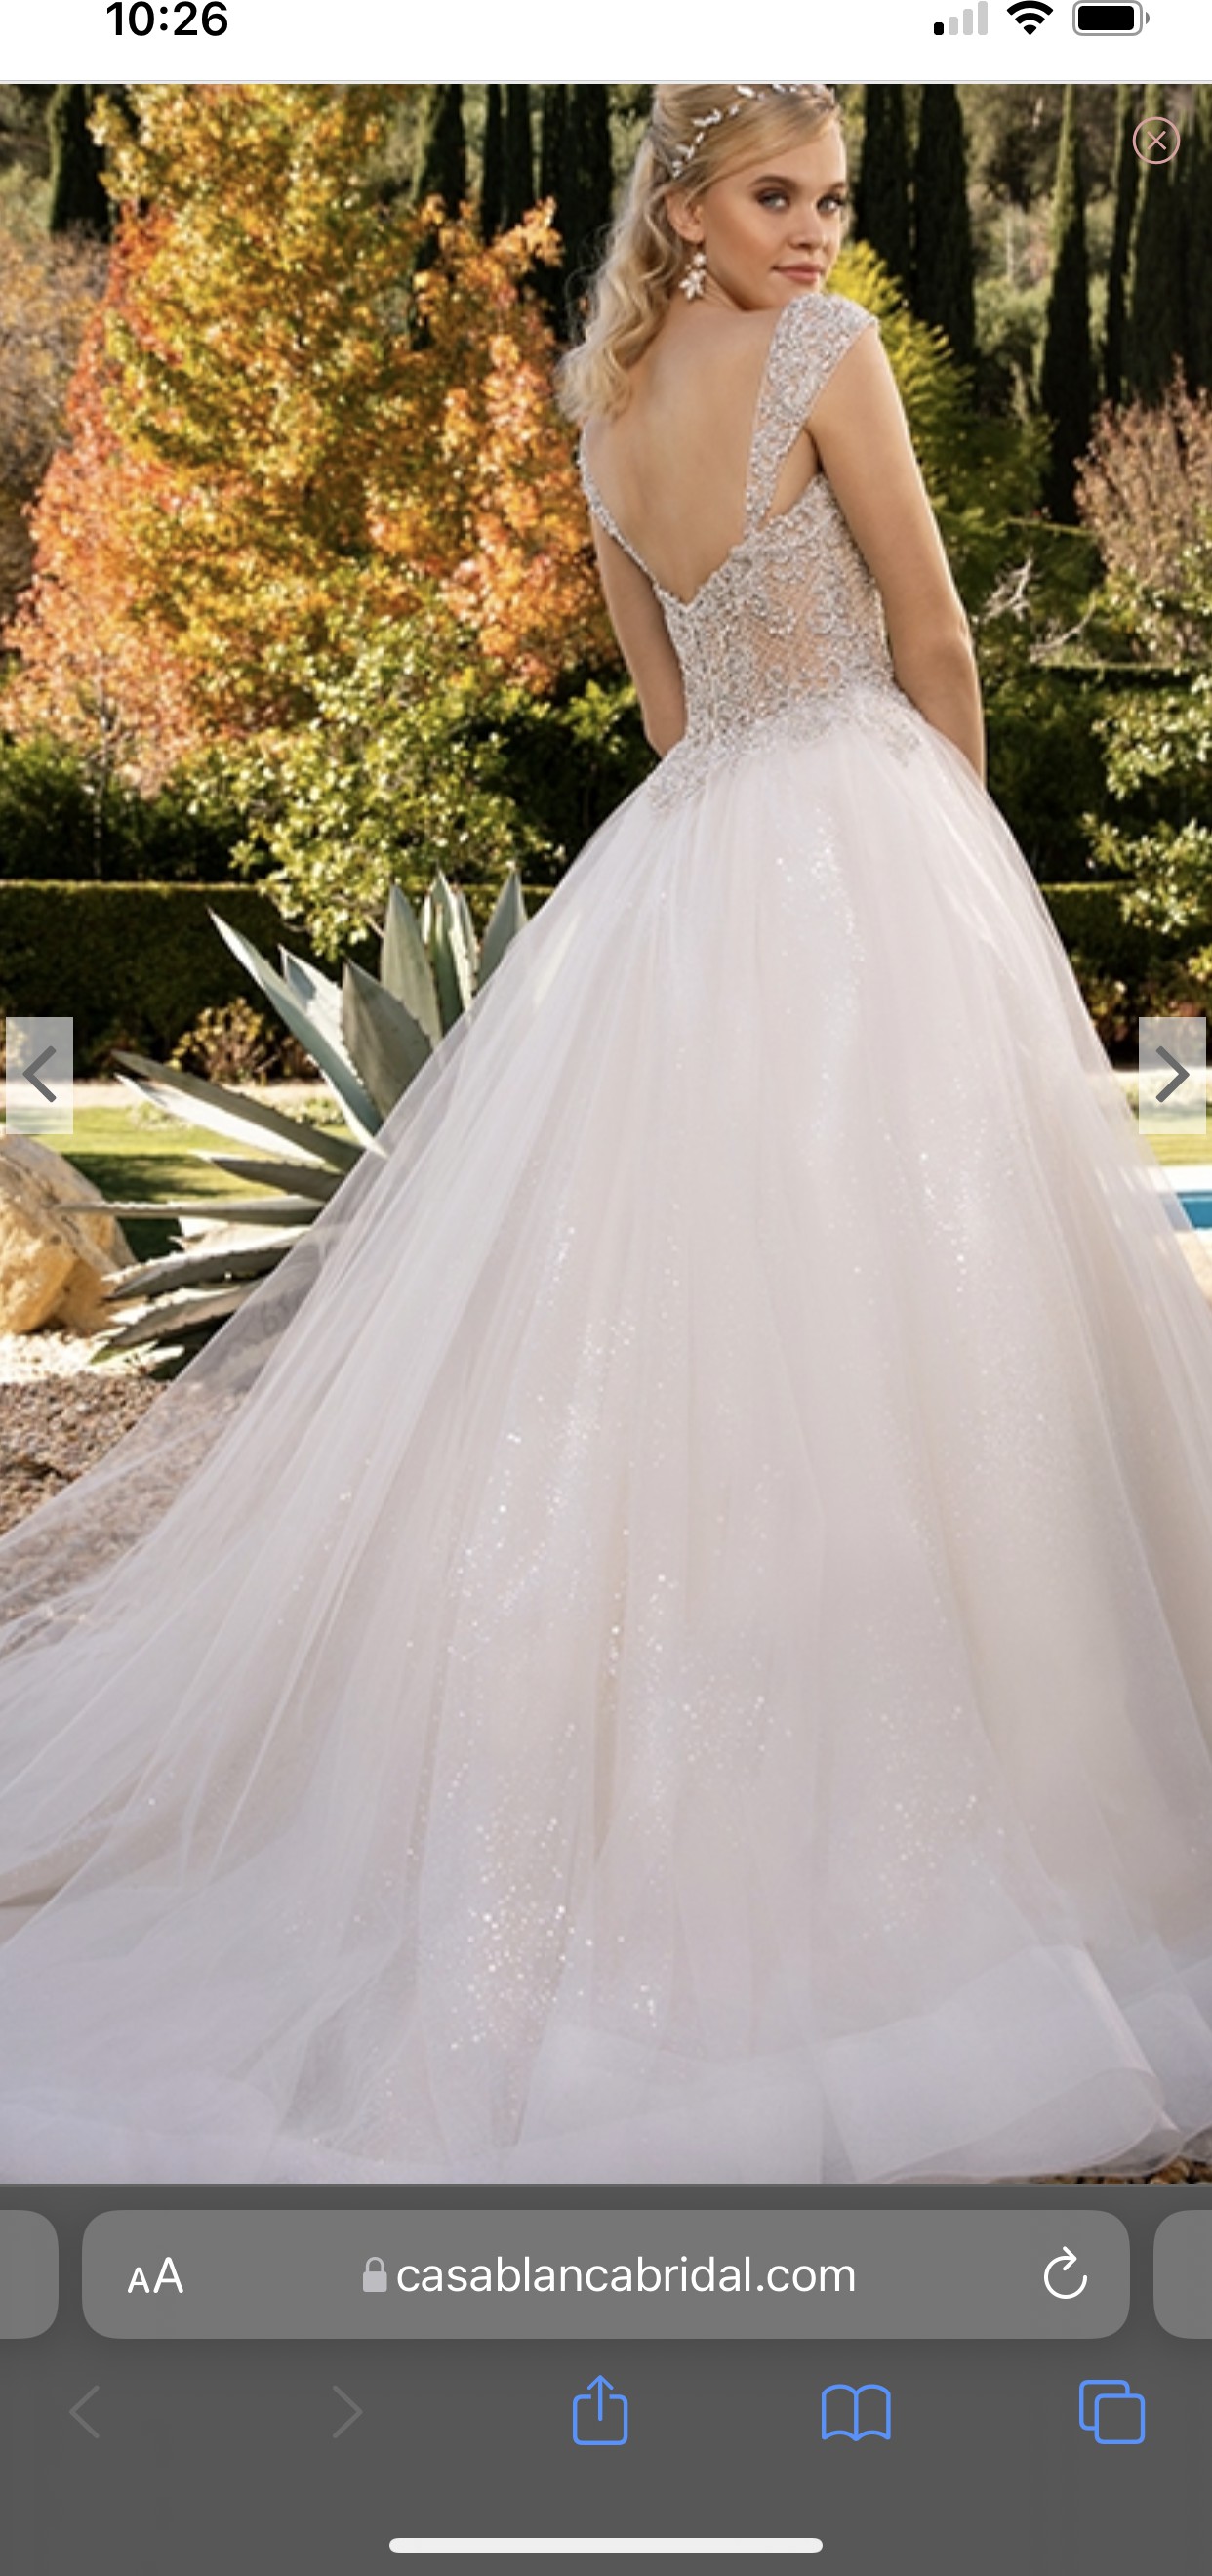 Casablanca Bridal New Wedding Dress Stillwhite 3496